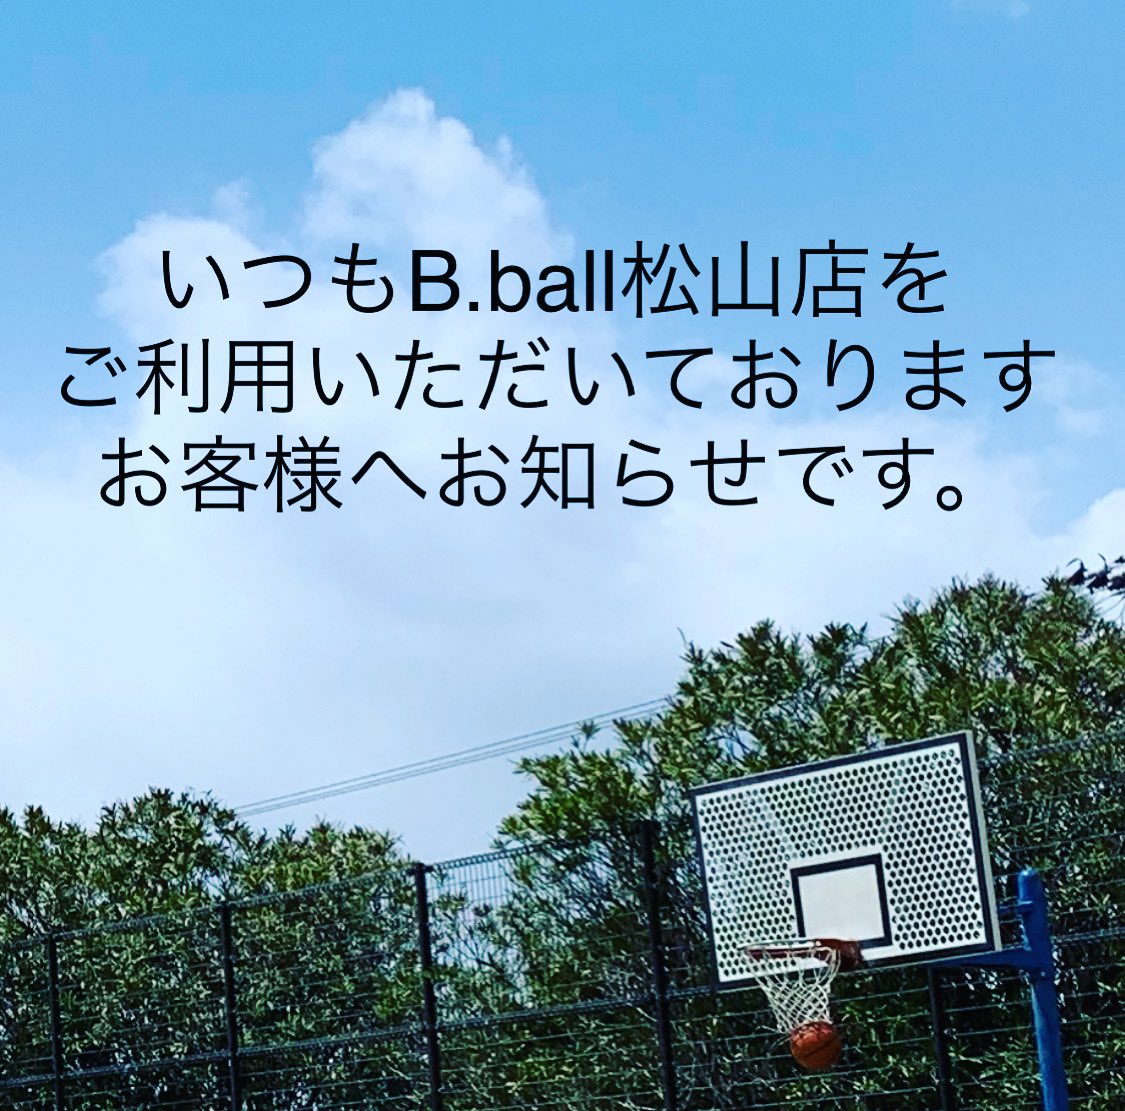 B Ball四国 インスタも始めました allshikoku Twitter